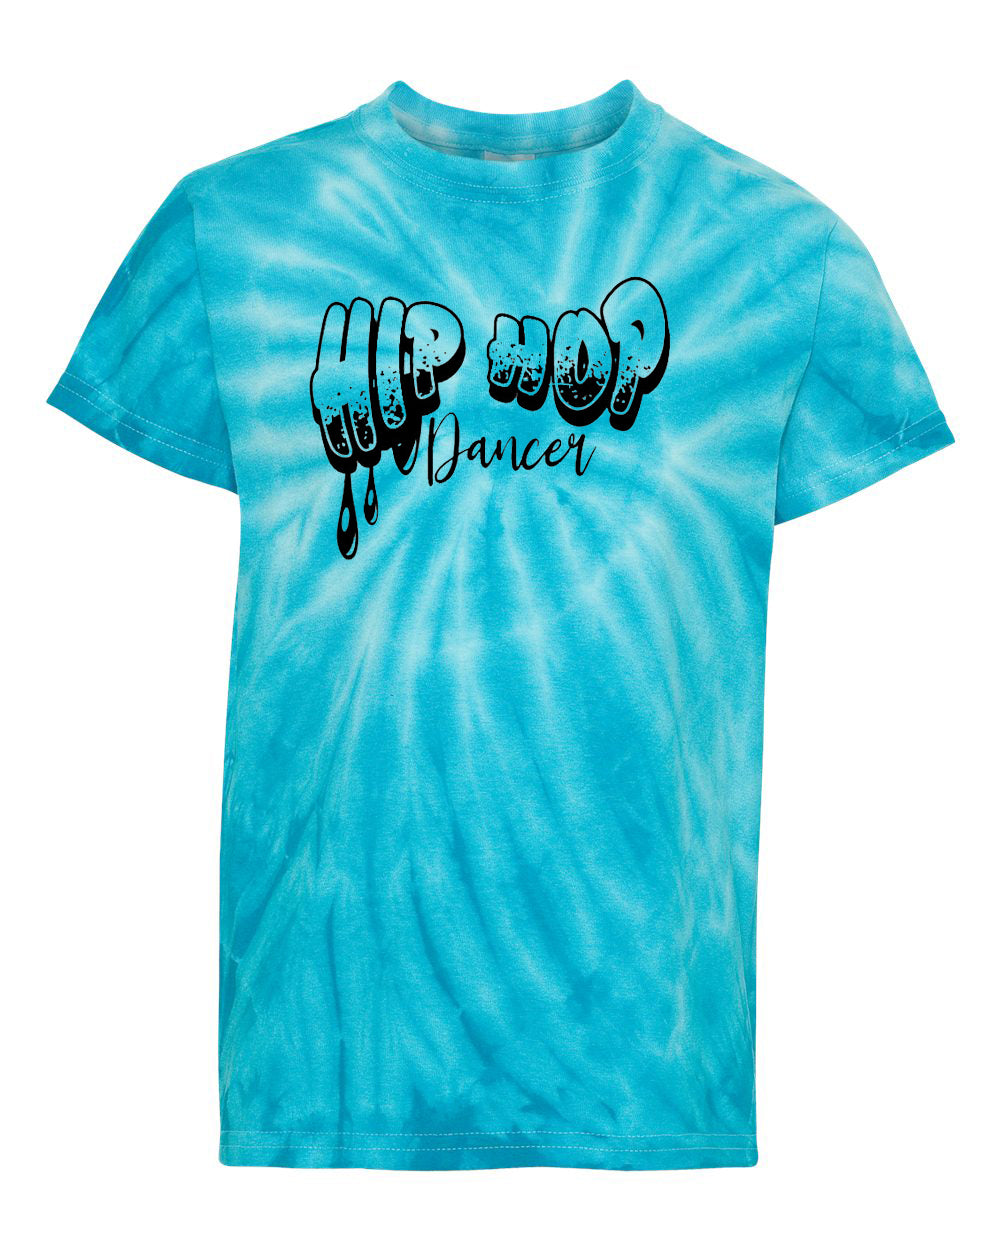 Hip Hop Dancer Adult Tie Dye T-Shirt Turquoise